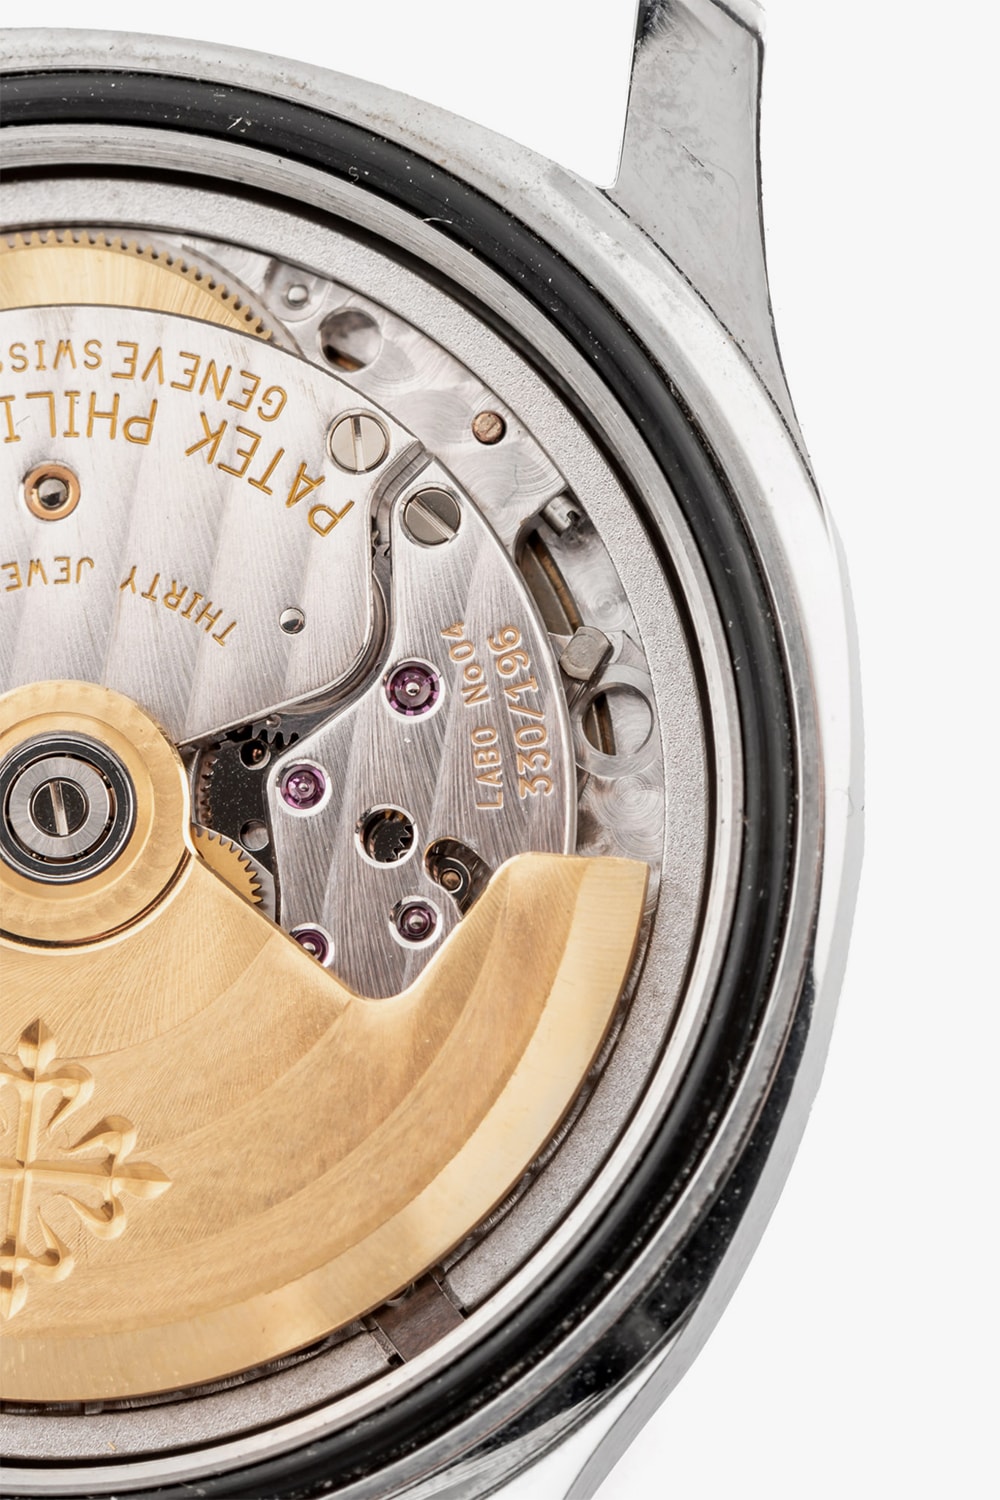 Patek Philippe Aquanaut Prototype 5060 Auction Sale Price antiquorum swiss watchmaking 